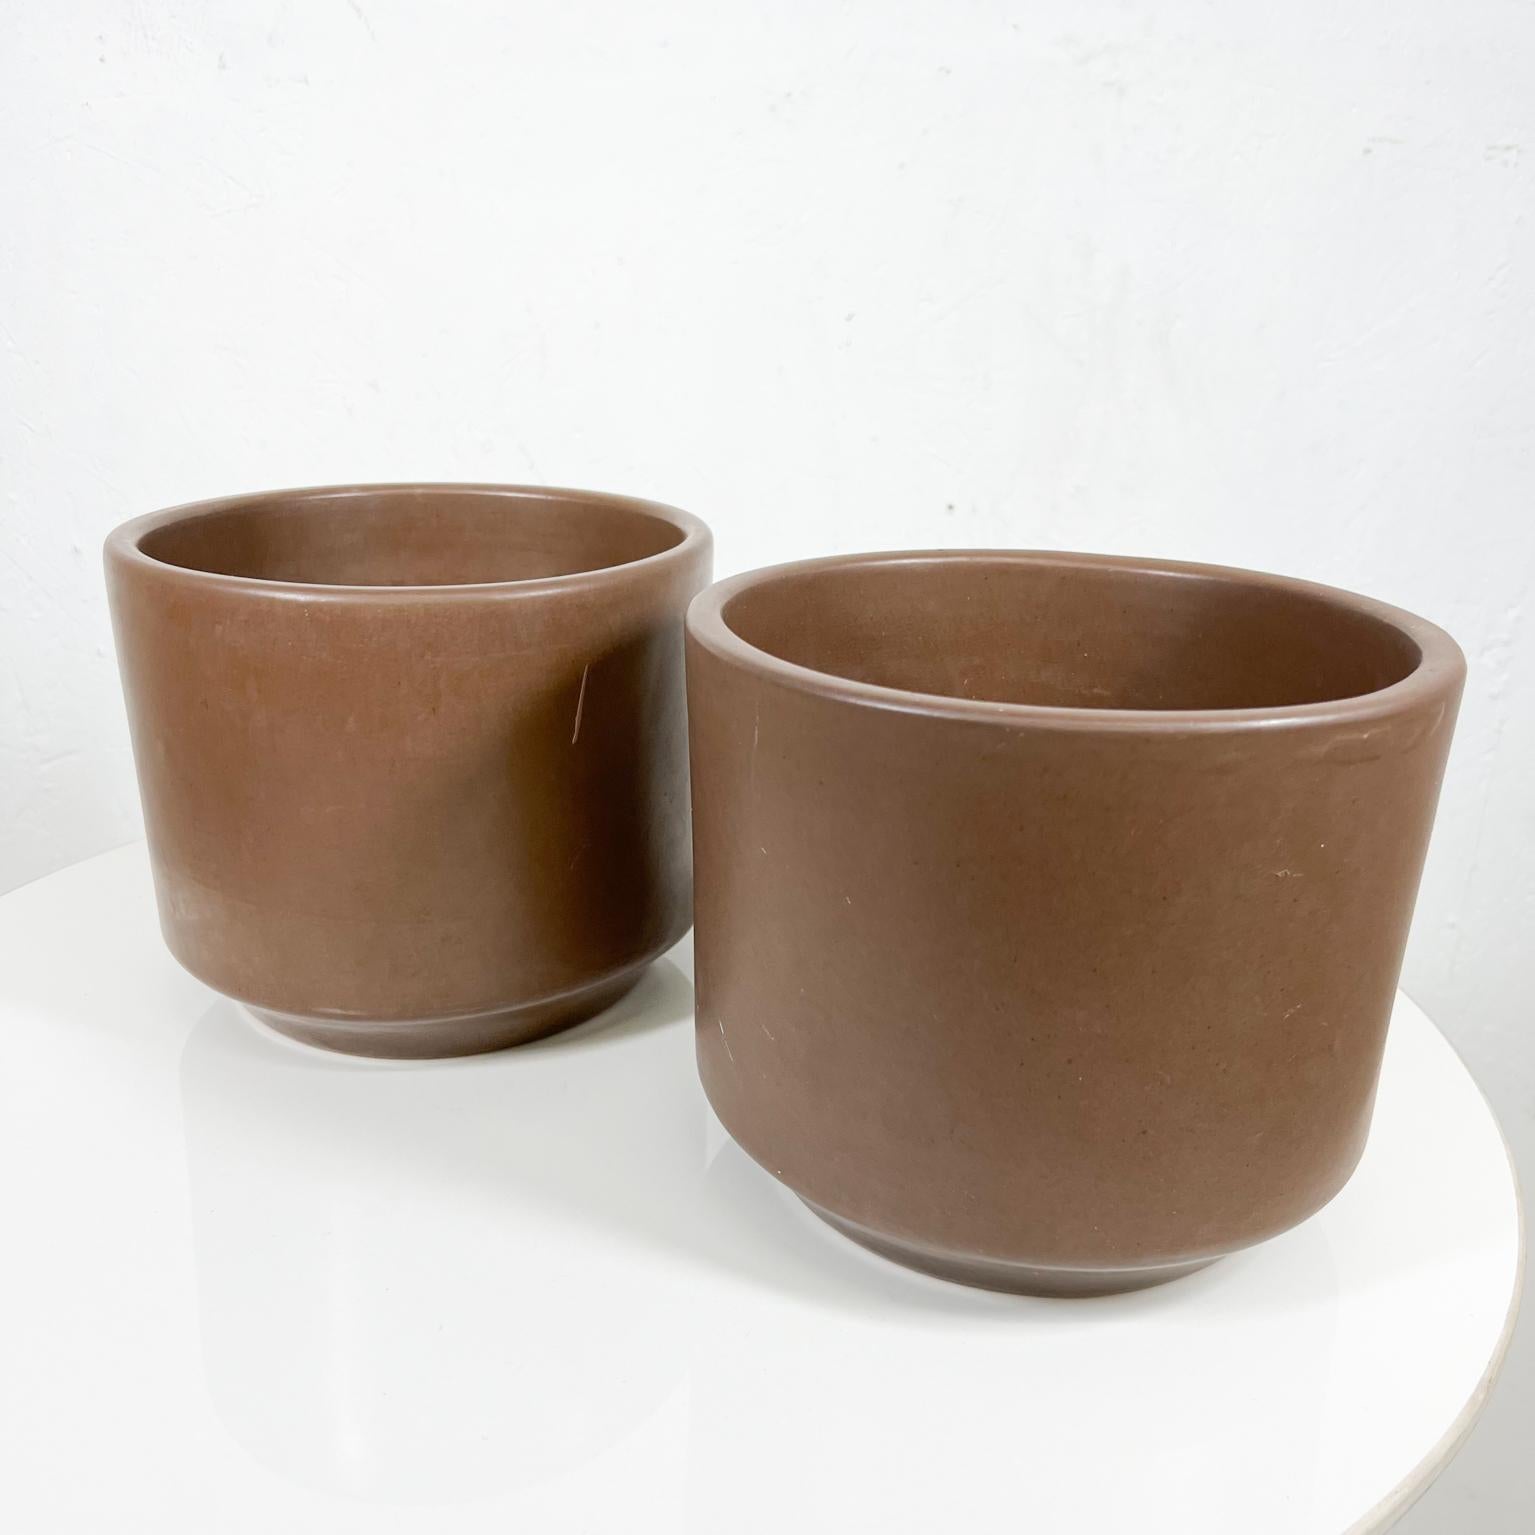 American 1960s Gainey Ceramics Architectural Modern Pottery Planter Set La Verne, Calif